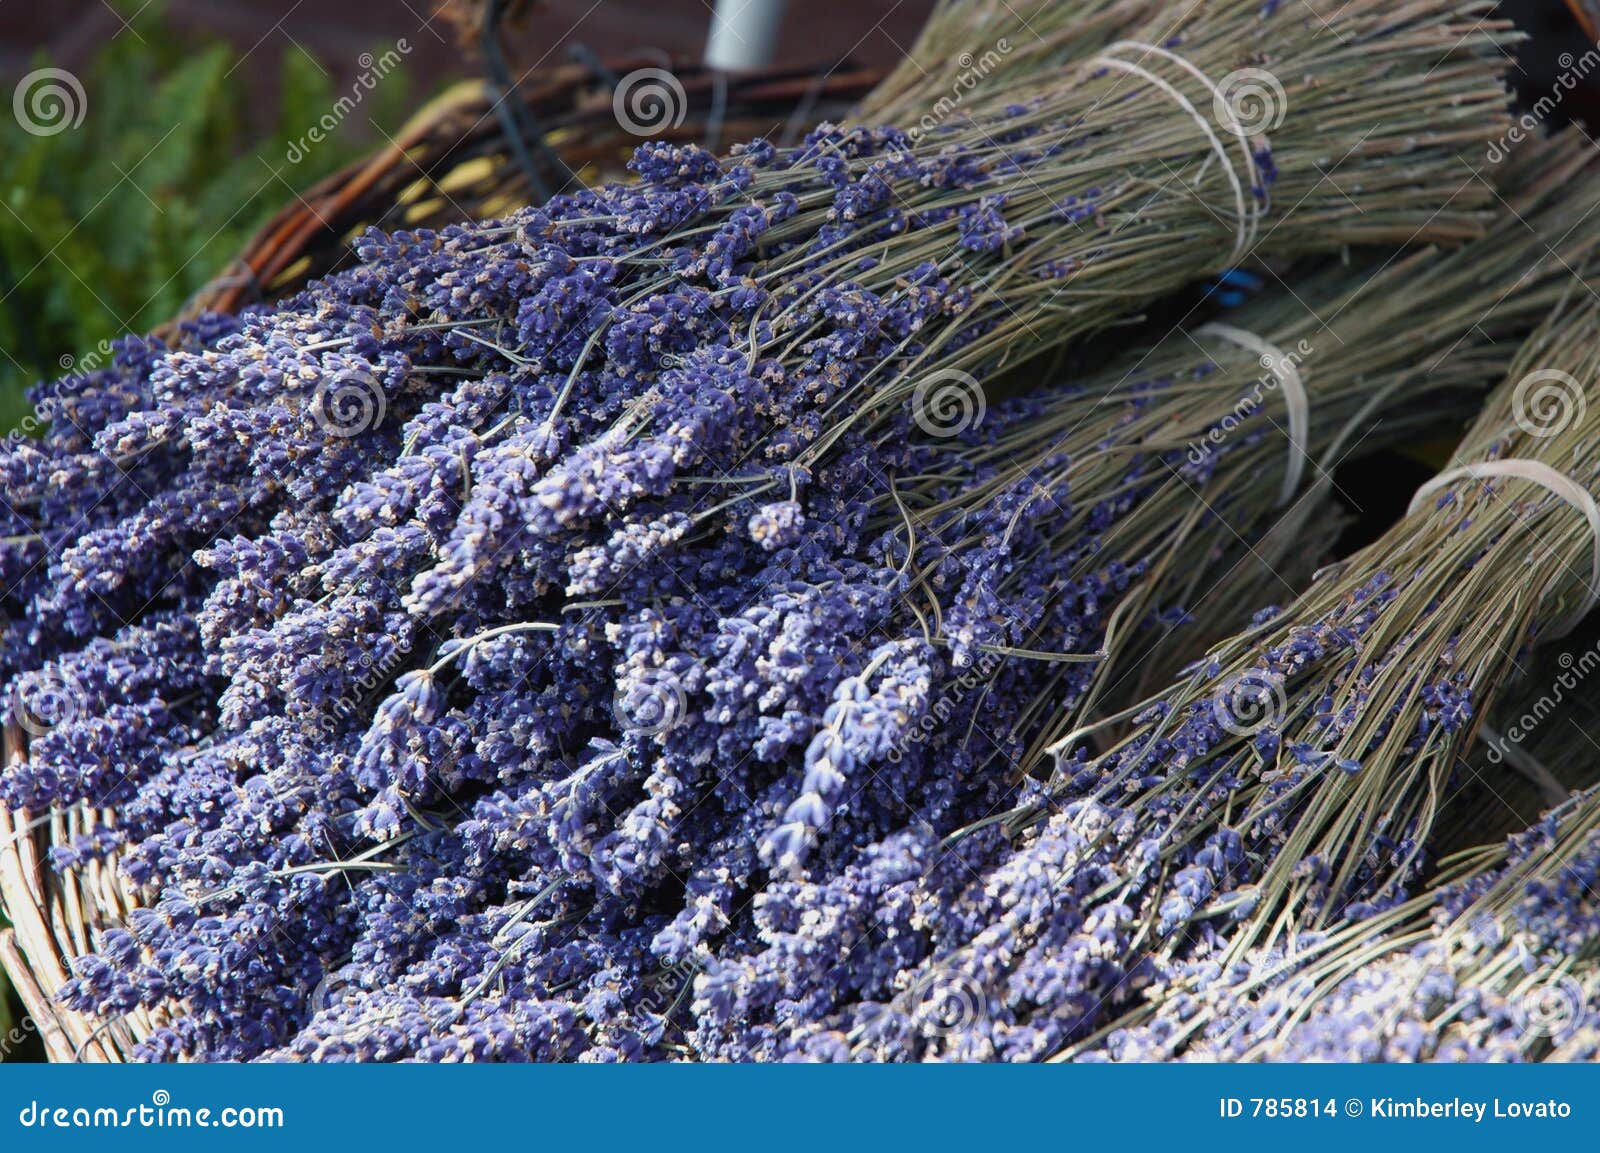 dried lavendar